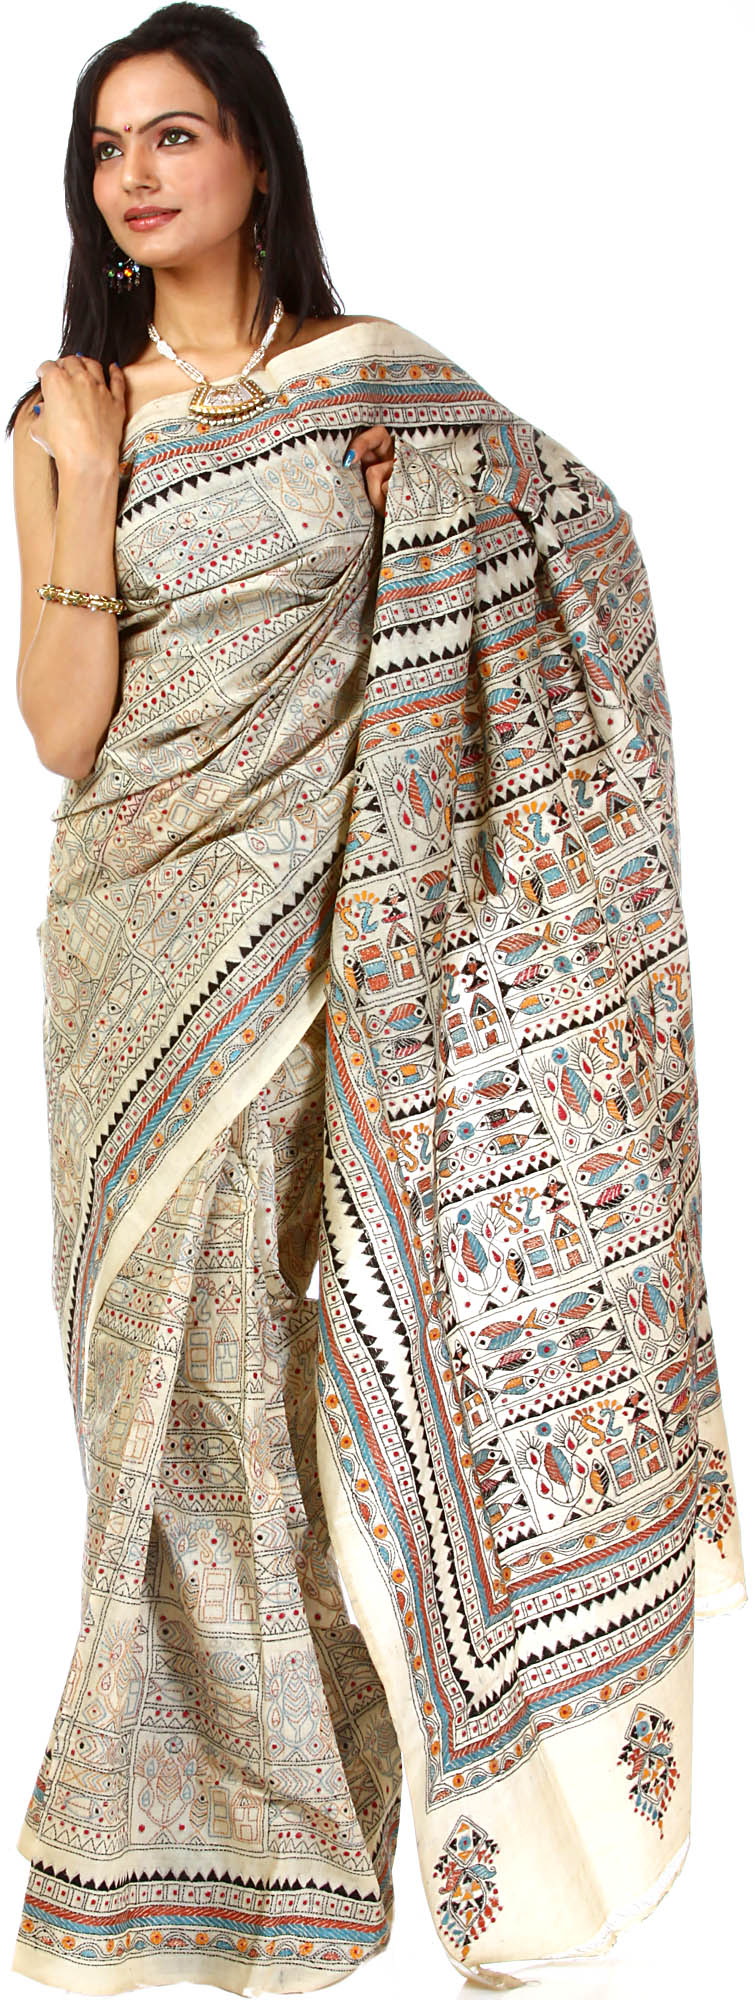 Beige Kantha Sari with Hand-Embroidered Folk Motifs | Exotic India Art